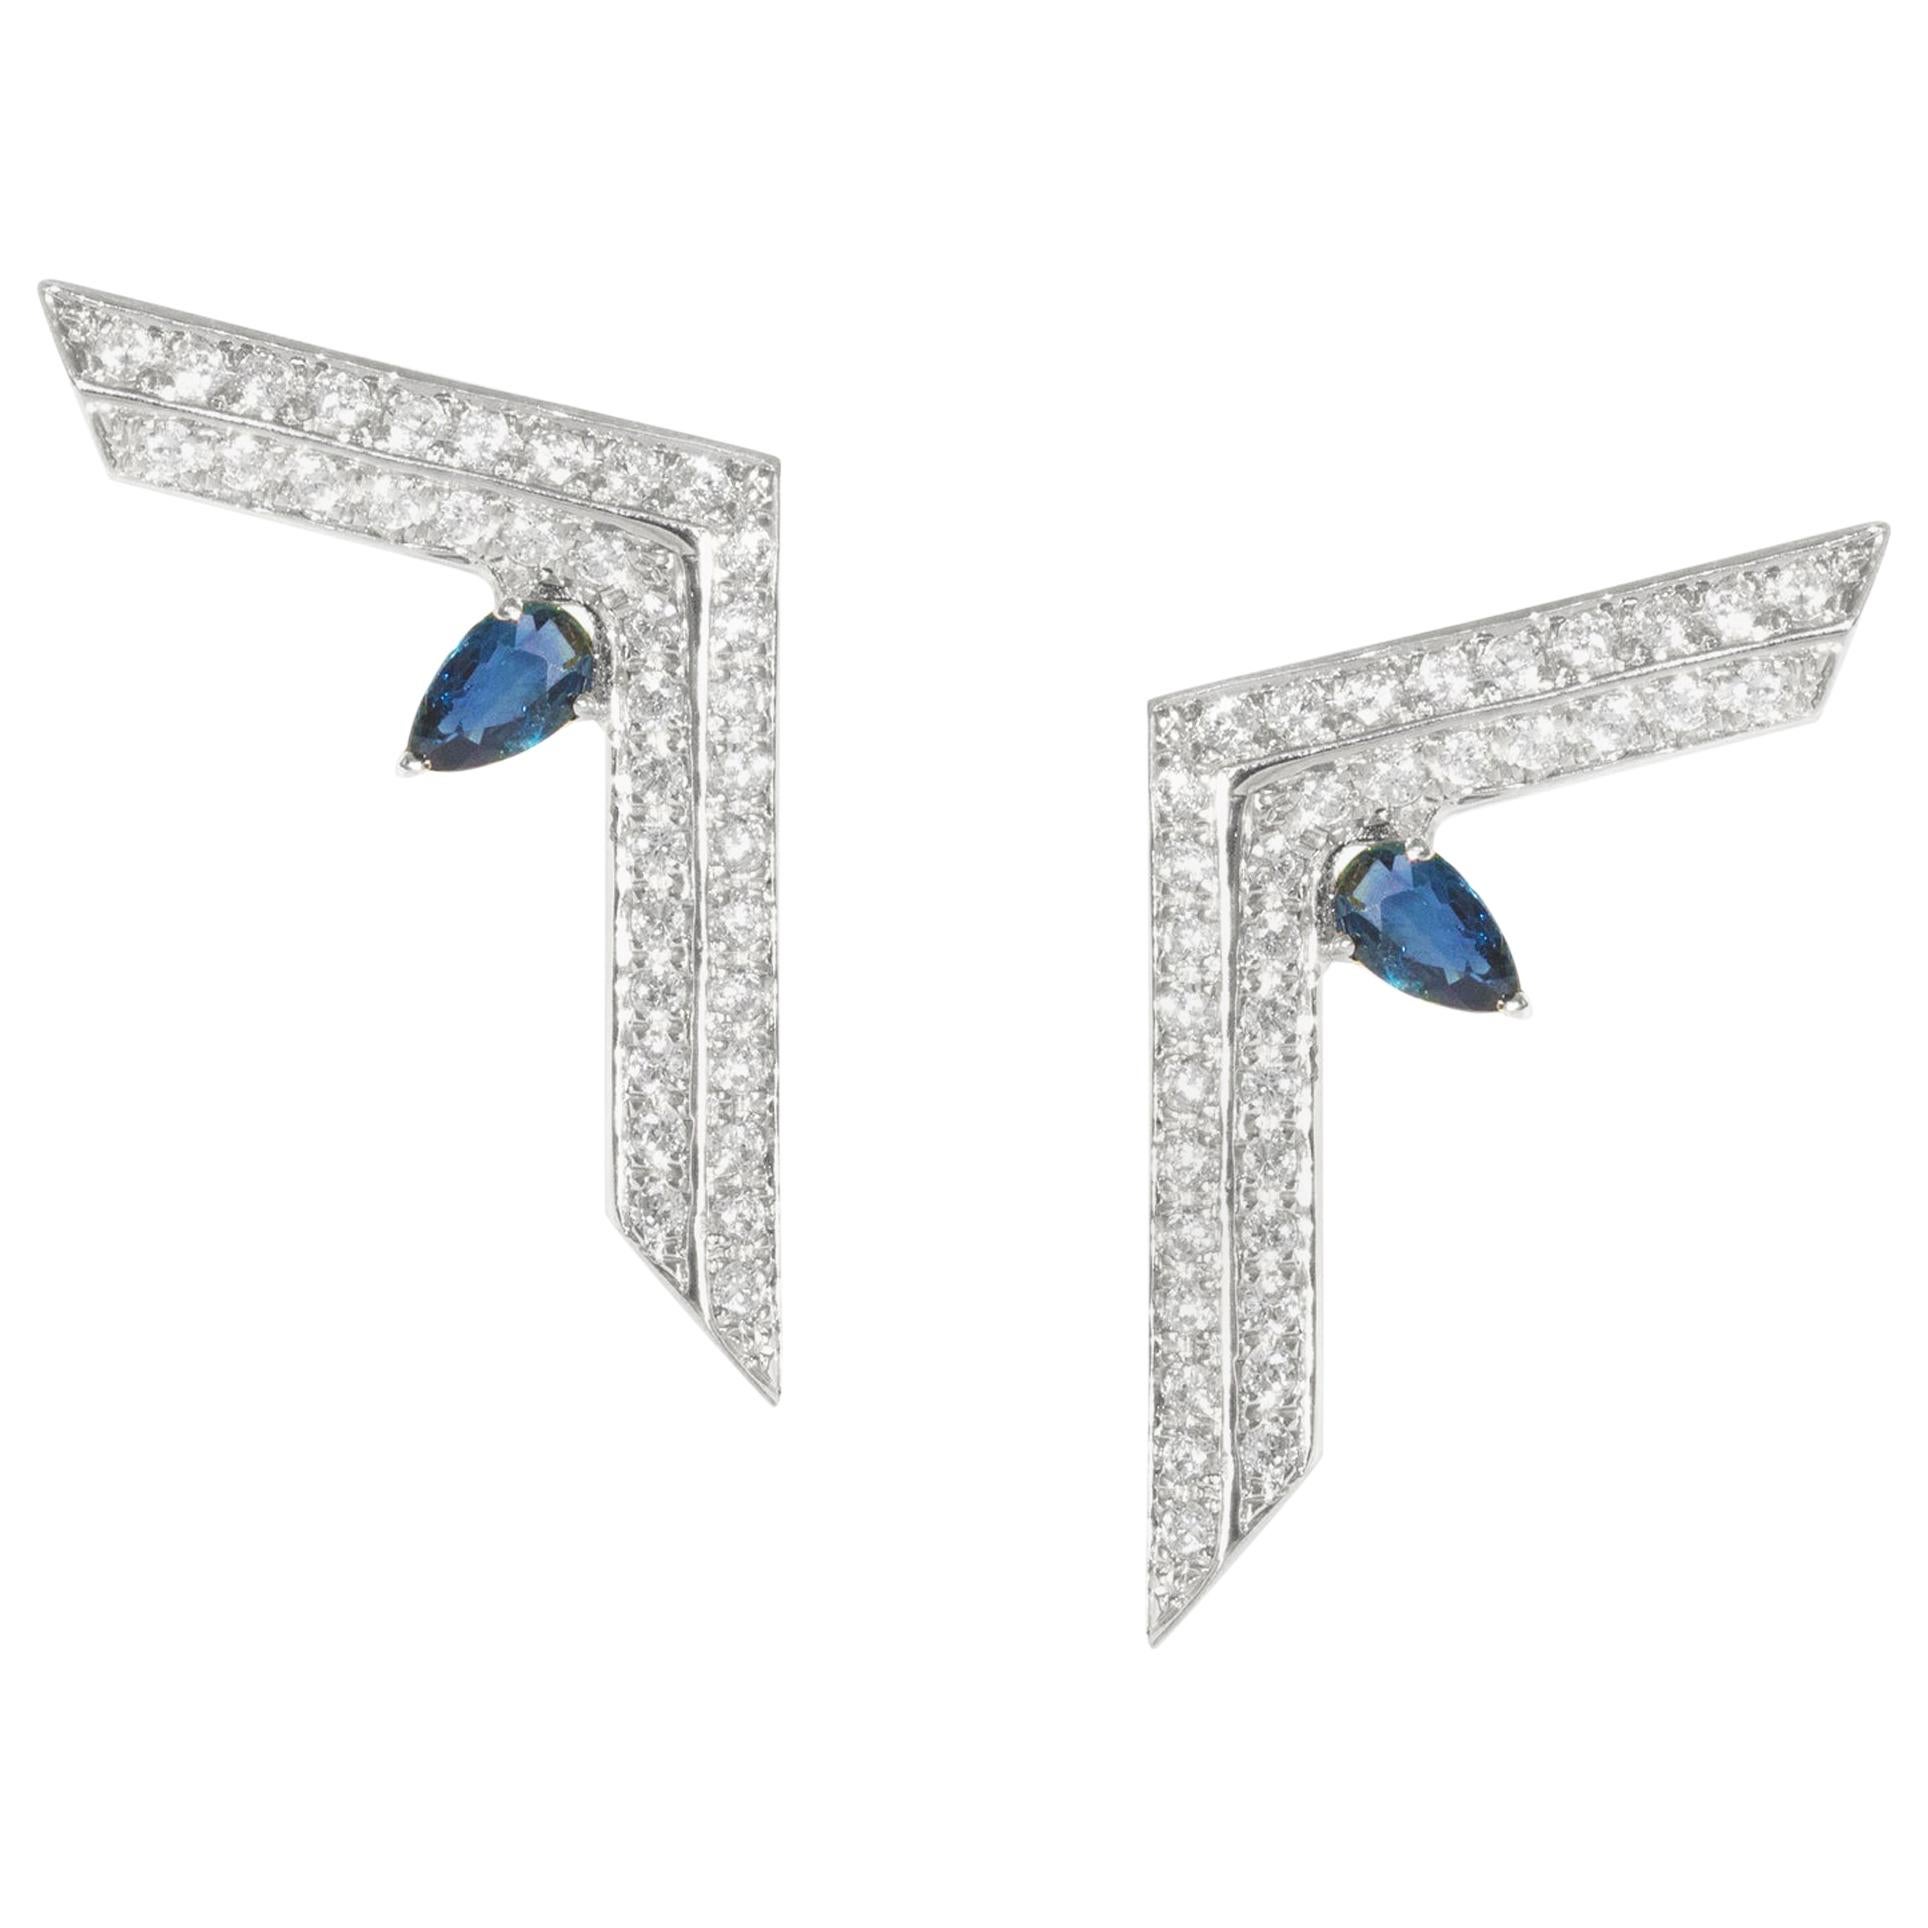 Ralph Masri Phoenician Script Diamond and Sapphire Earrings